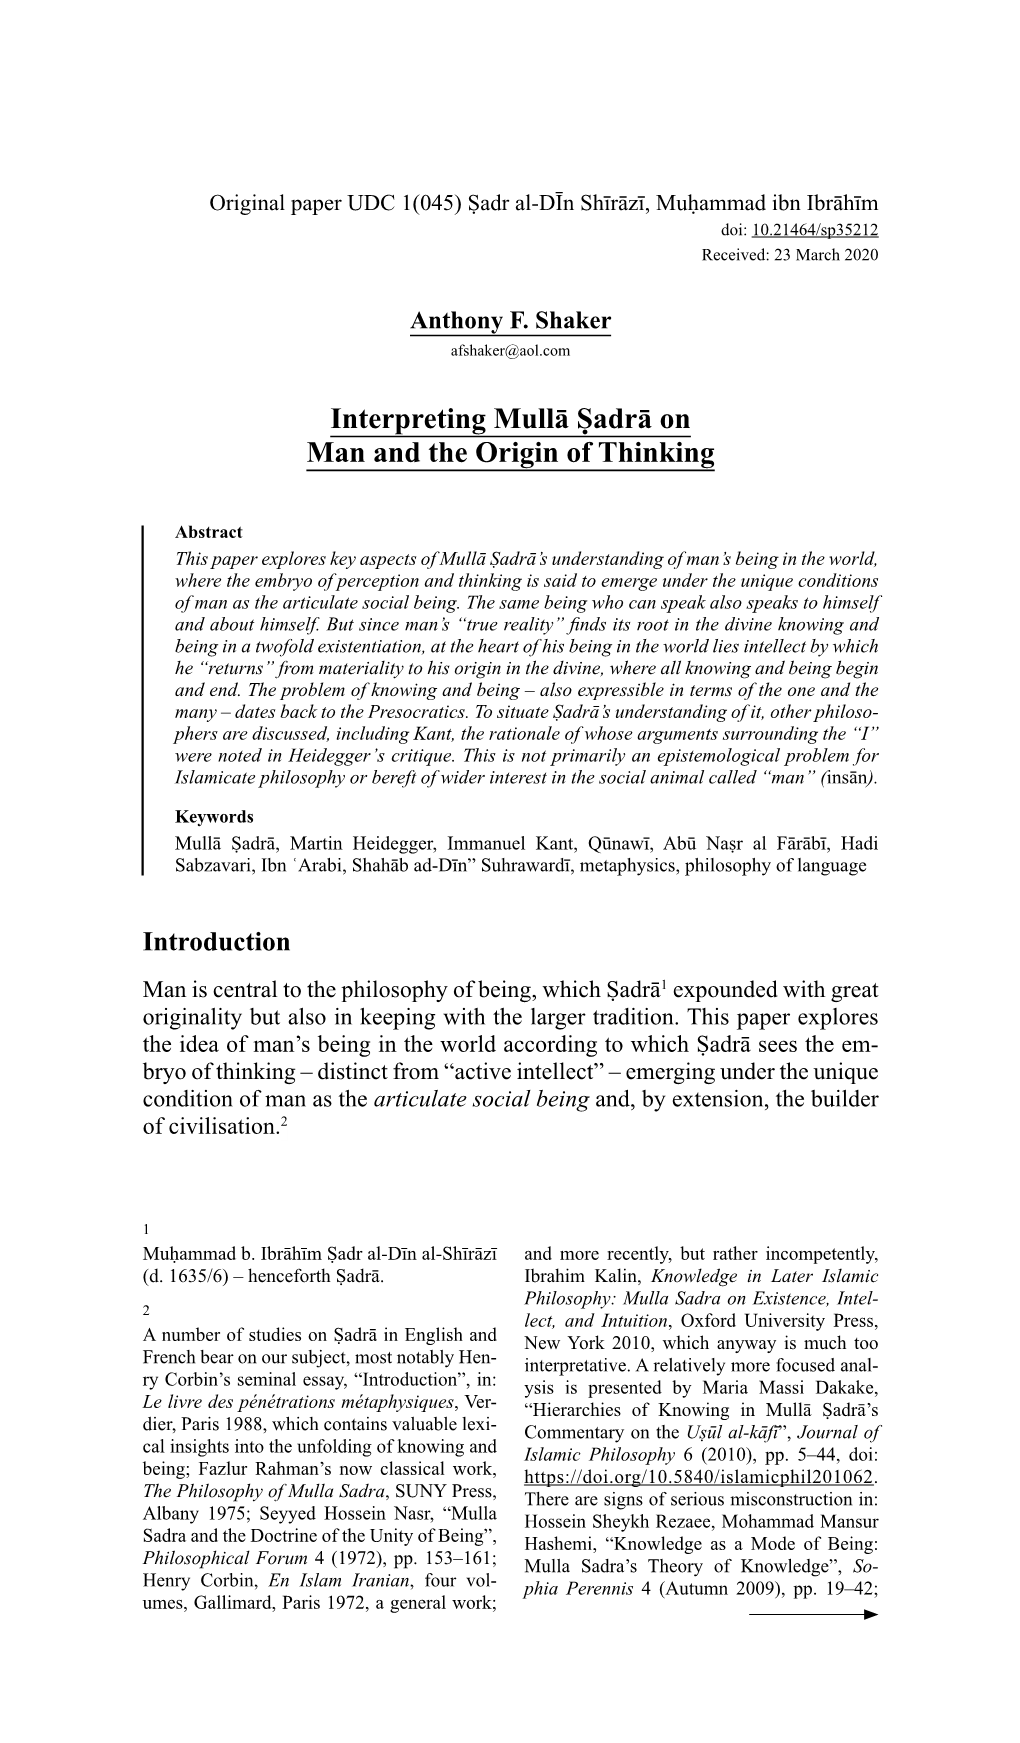 Interpreting Mullā Ṣadrā on Man and the Origin of Thinking